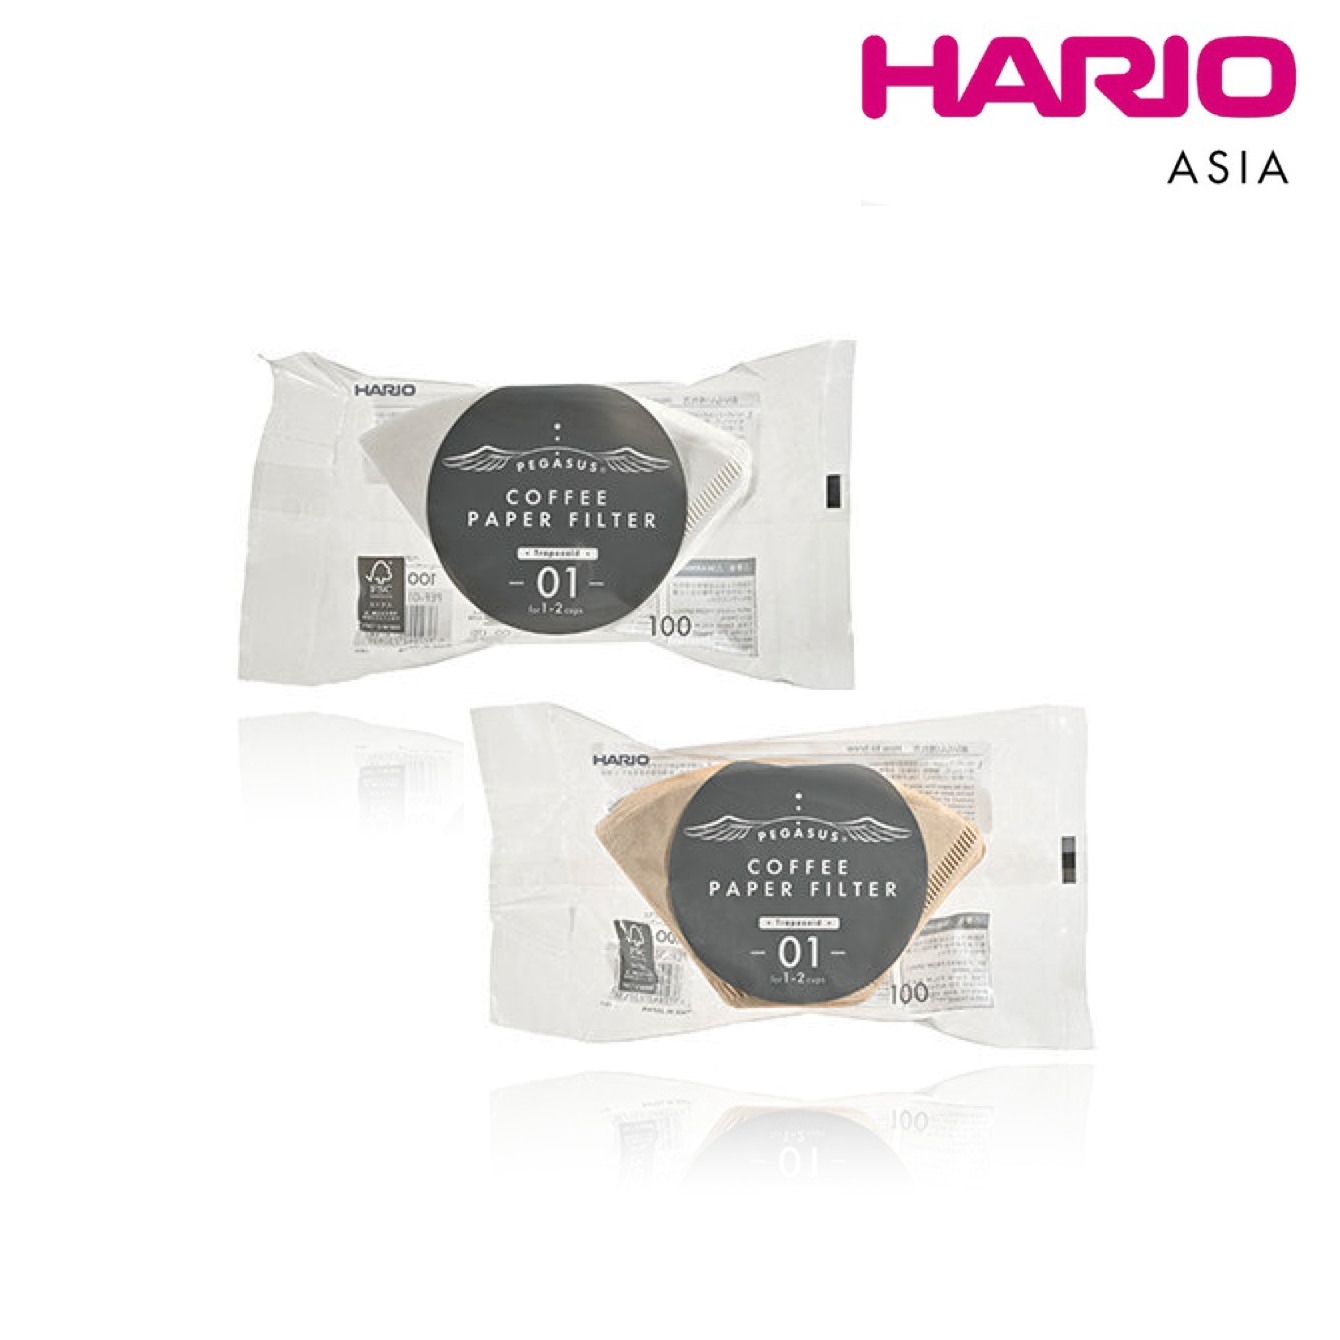 Hario Pegasus Coffee Paper Filter Size 01 (100 count)